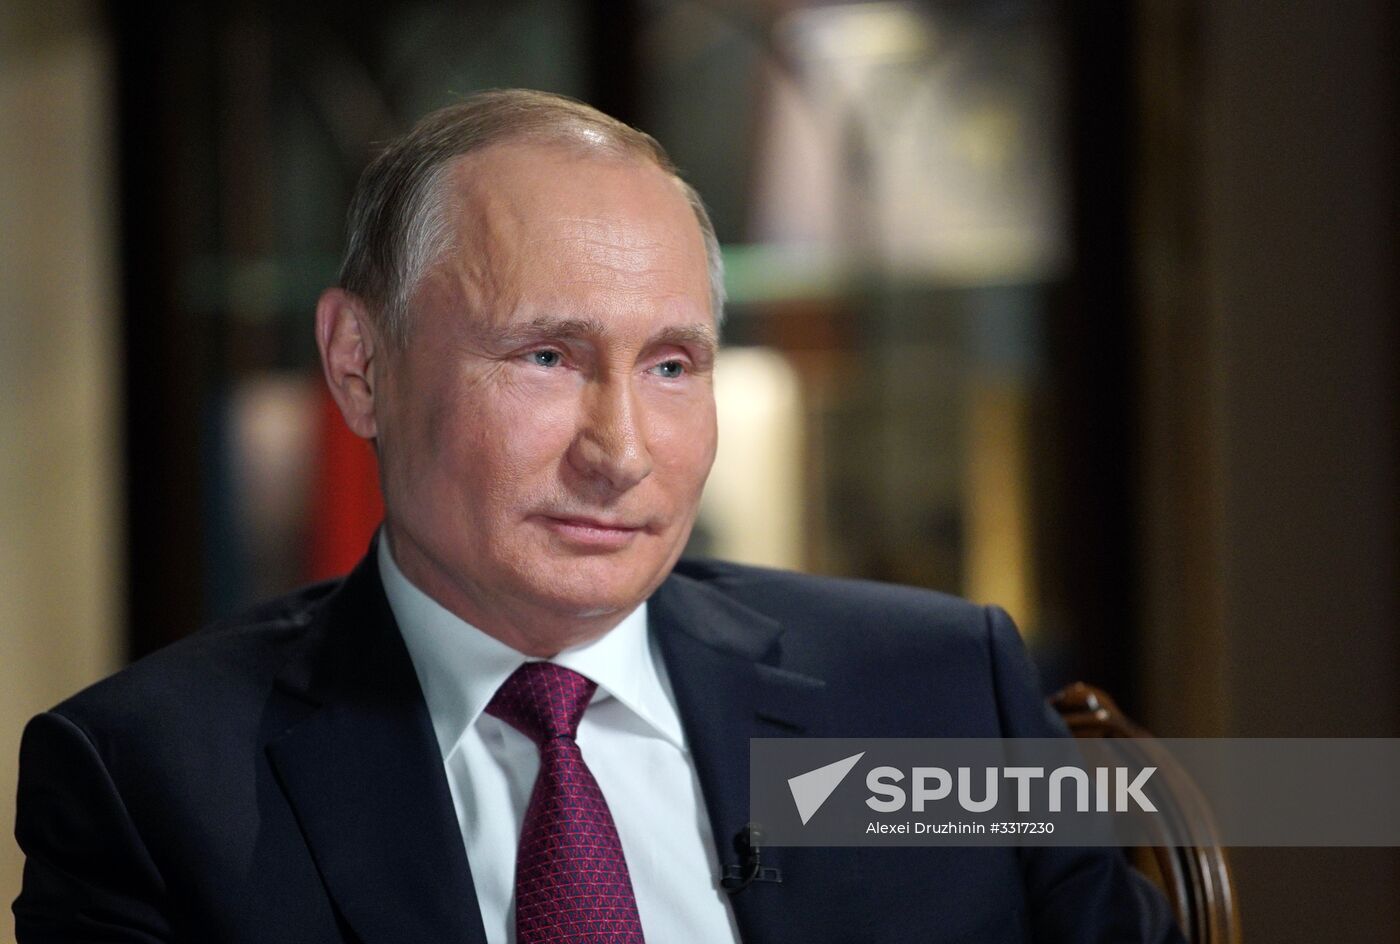 President Vladimir Putin gives an interview to NBC network